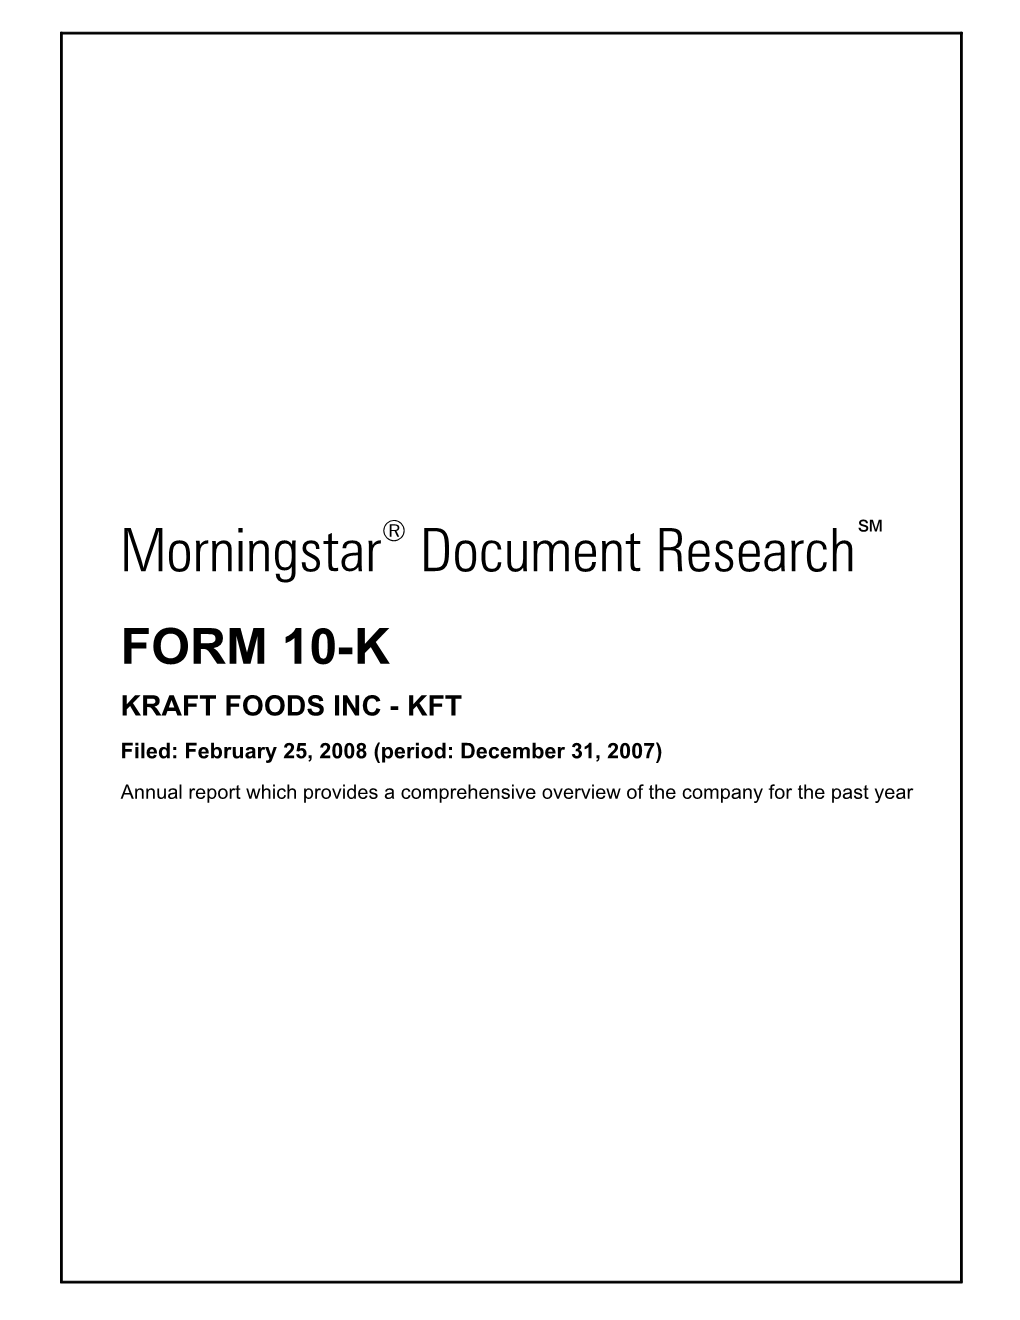 Morningstar Document Research FORM 10-K